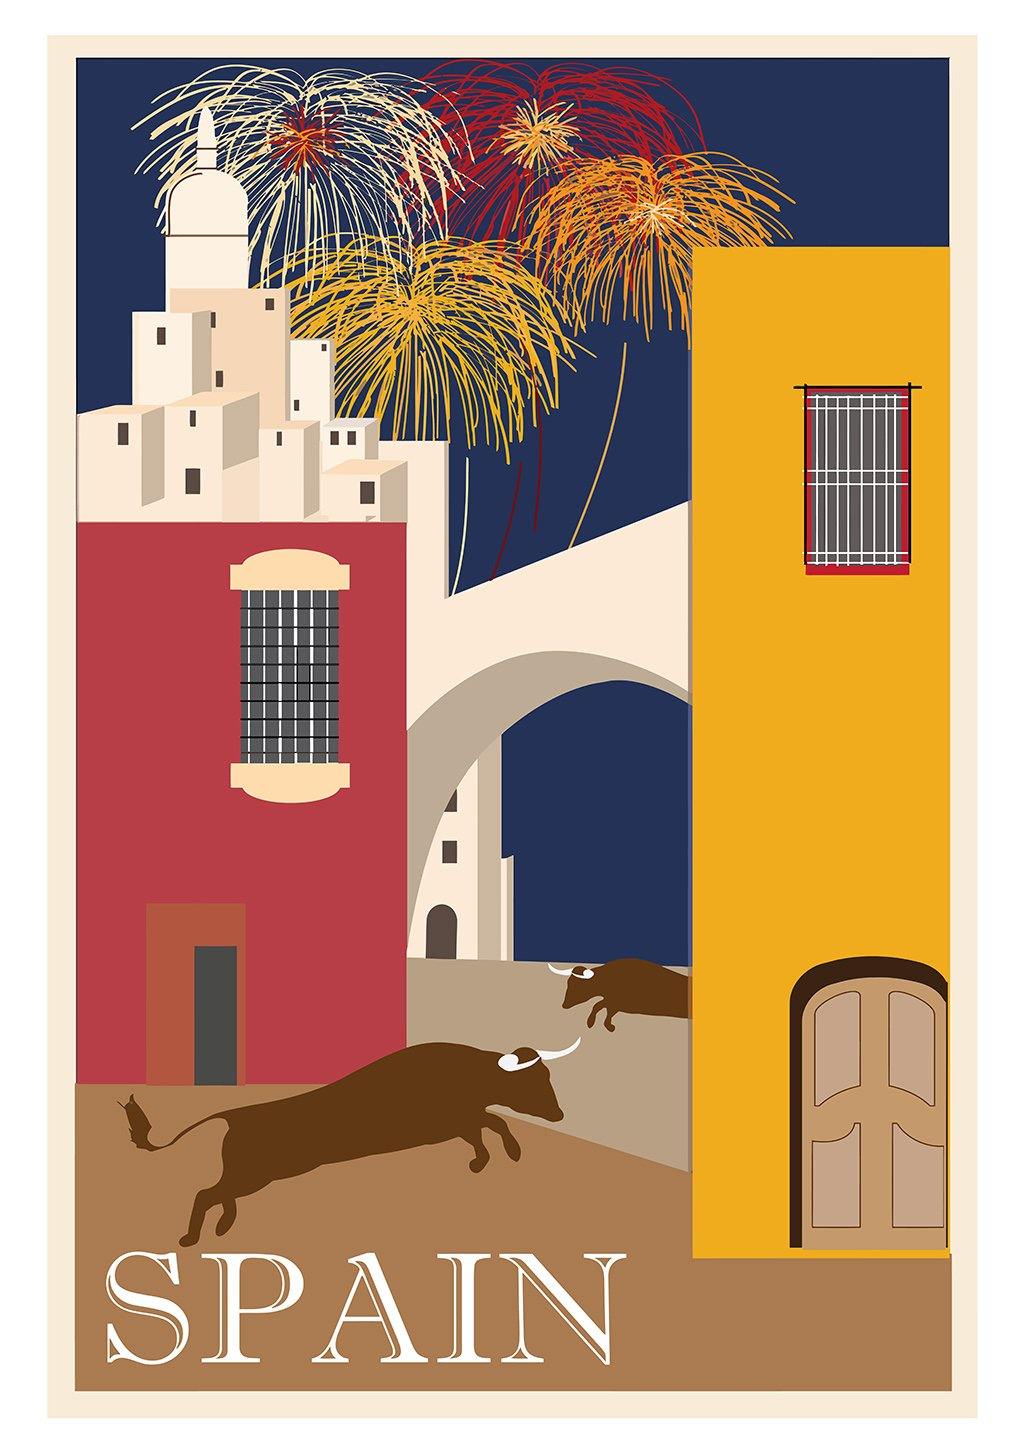 SPAIN TRAVEL POSTER: Spanish Illustration Print - Pimlico Prints